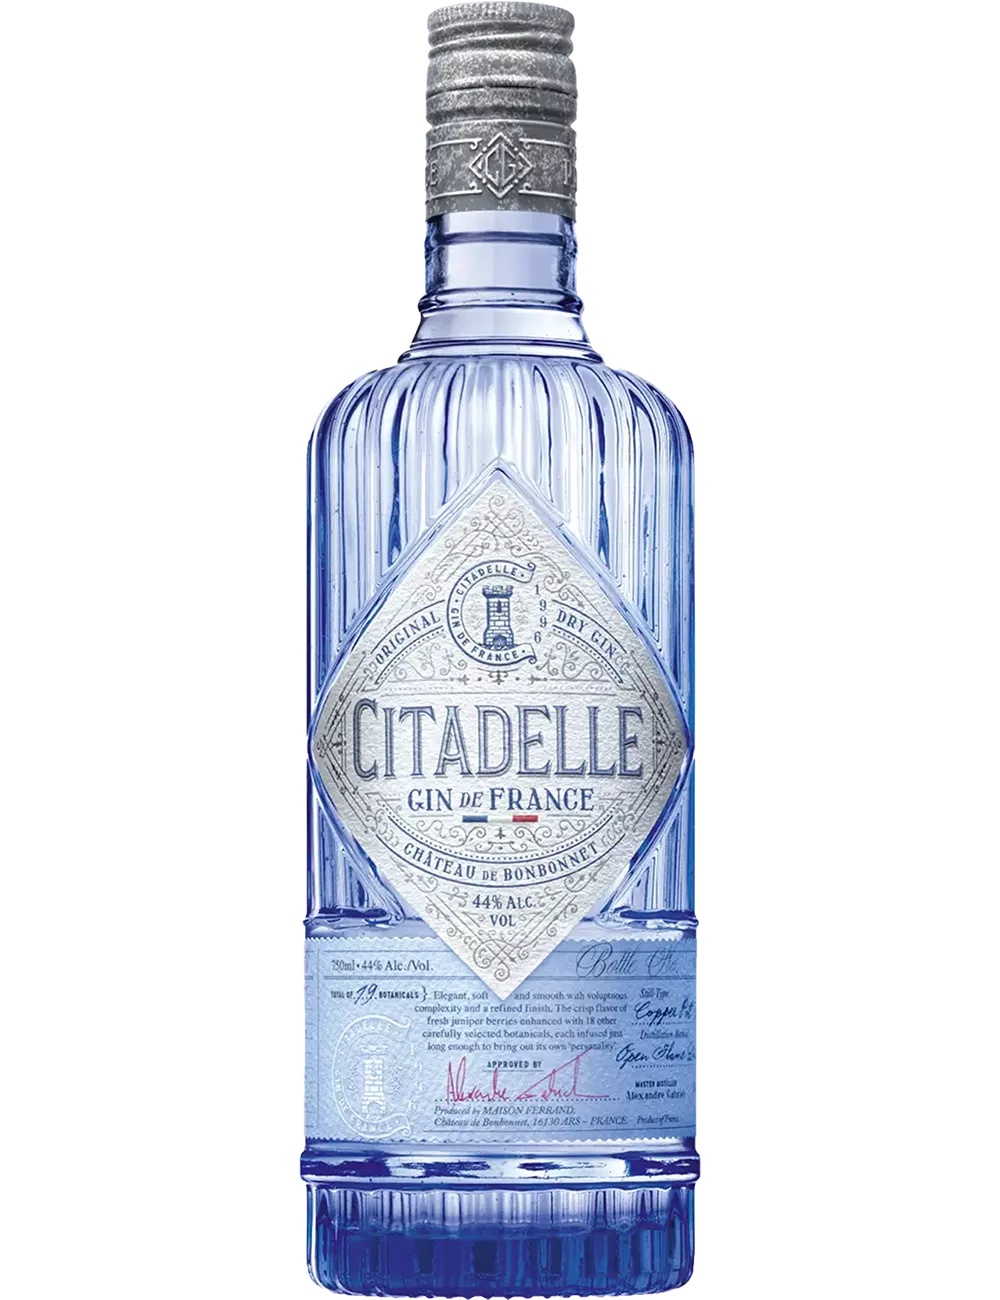 Citadelle - Distilled gin